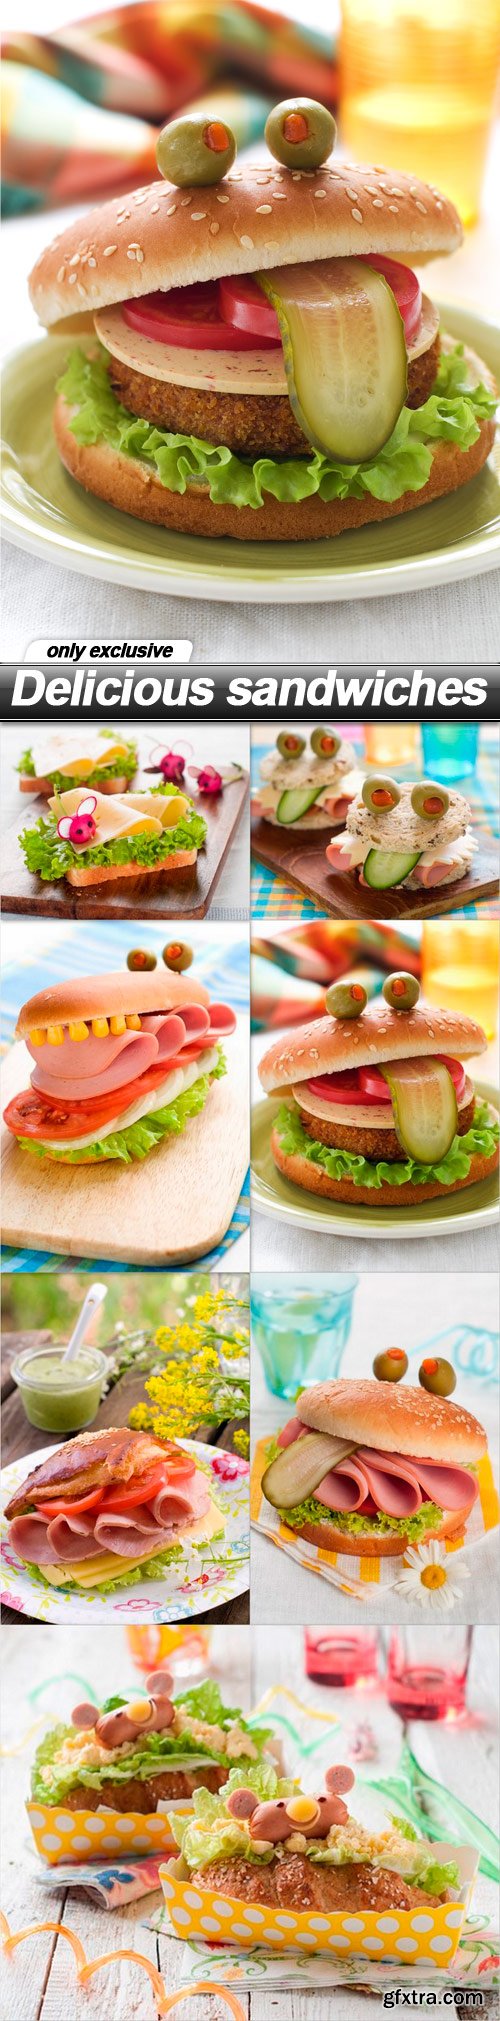 Delicious sandwiches - 7 UHQ JPEG